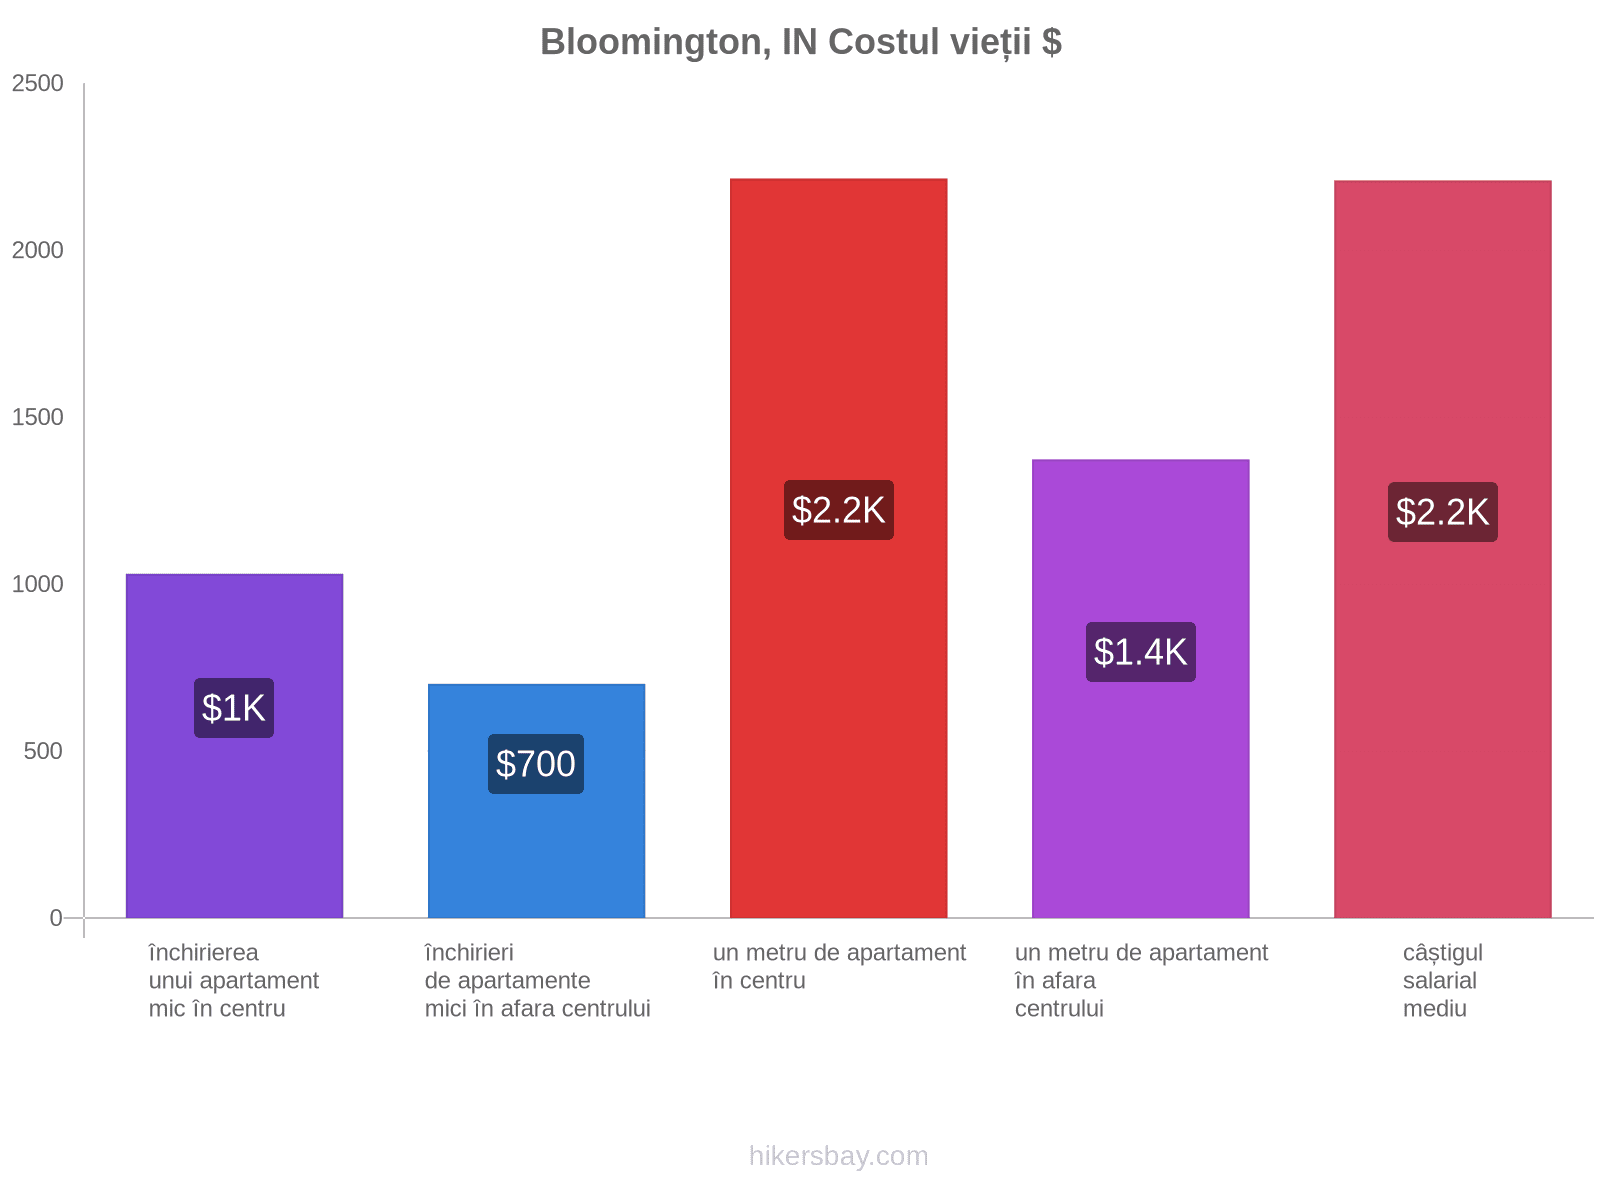 Bloomington, IN costul vieții hikersbay.com